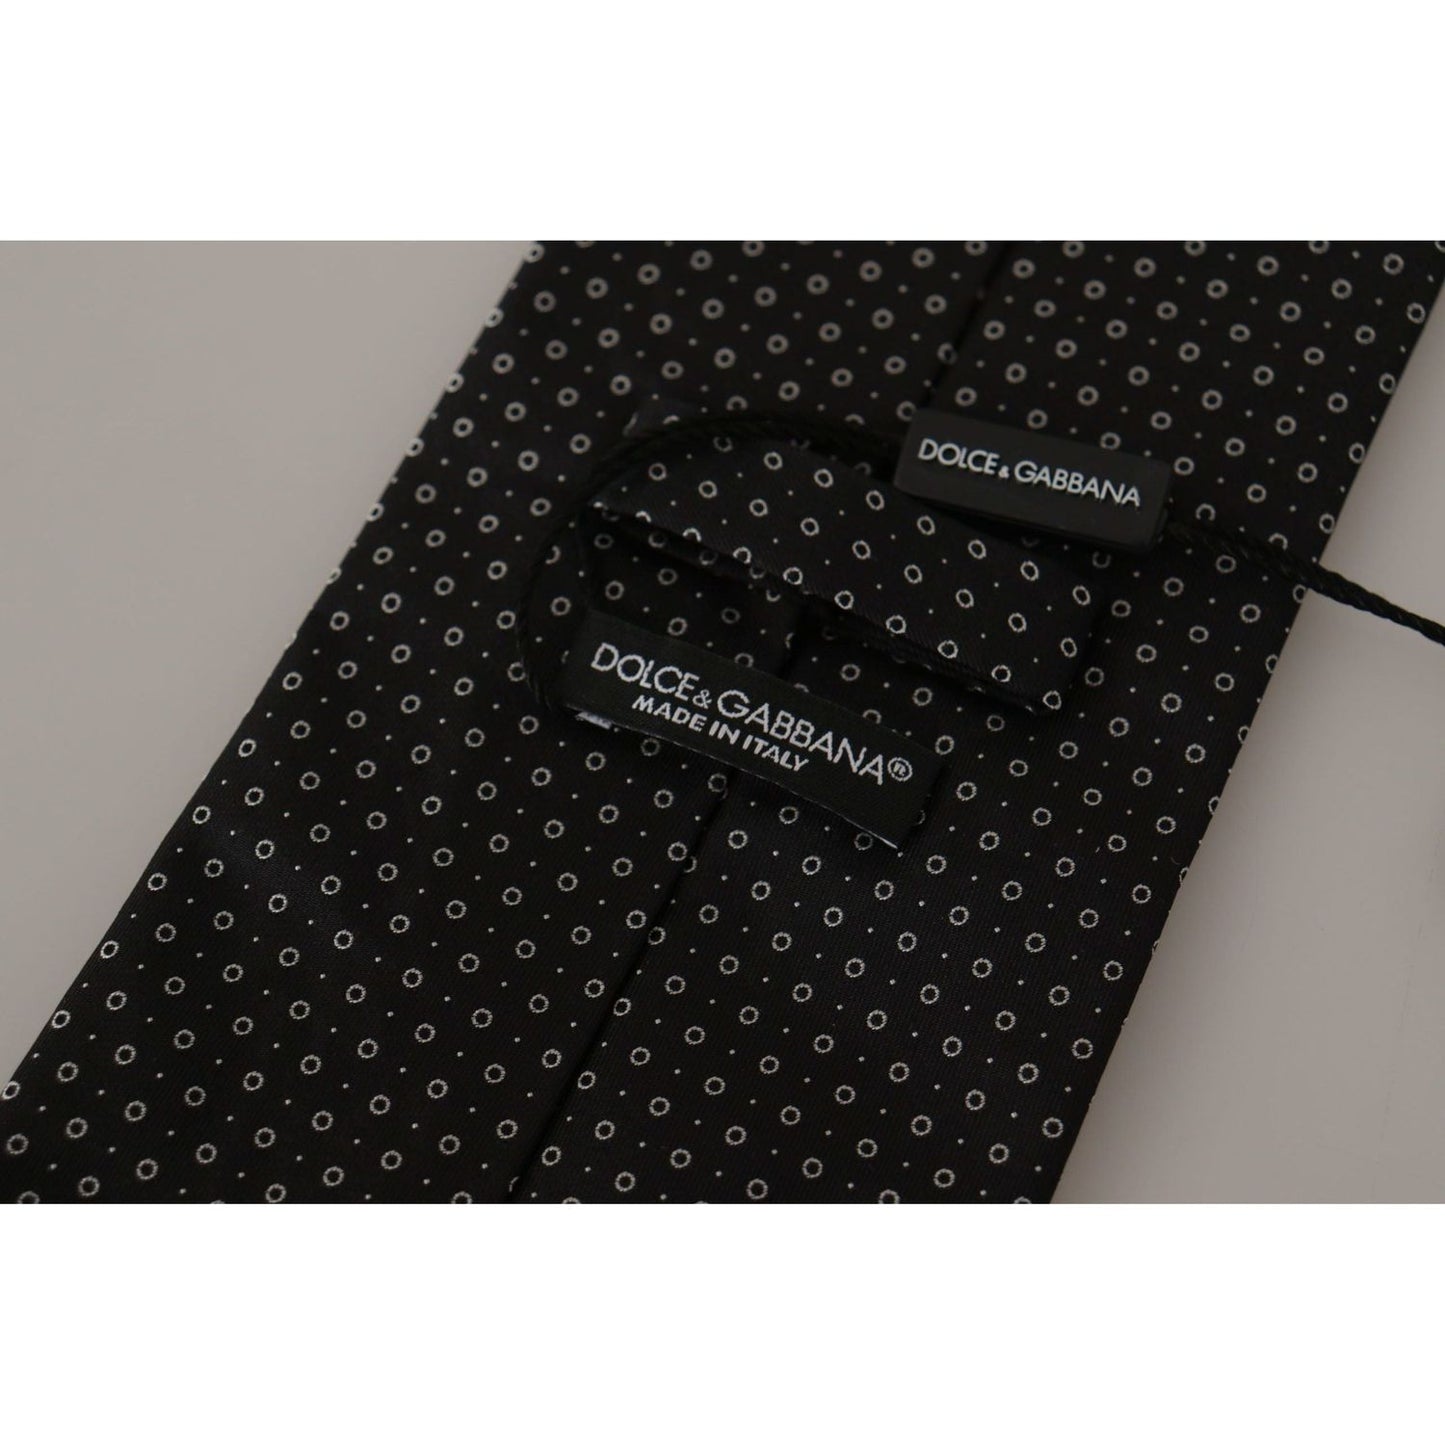 Dolce & Gabbana Elegant Black White Polka Dot Silk Tie white-black-polka-dots-necktie-accessory-100-silk-tie